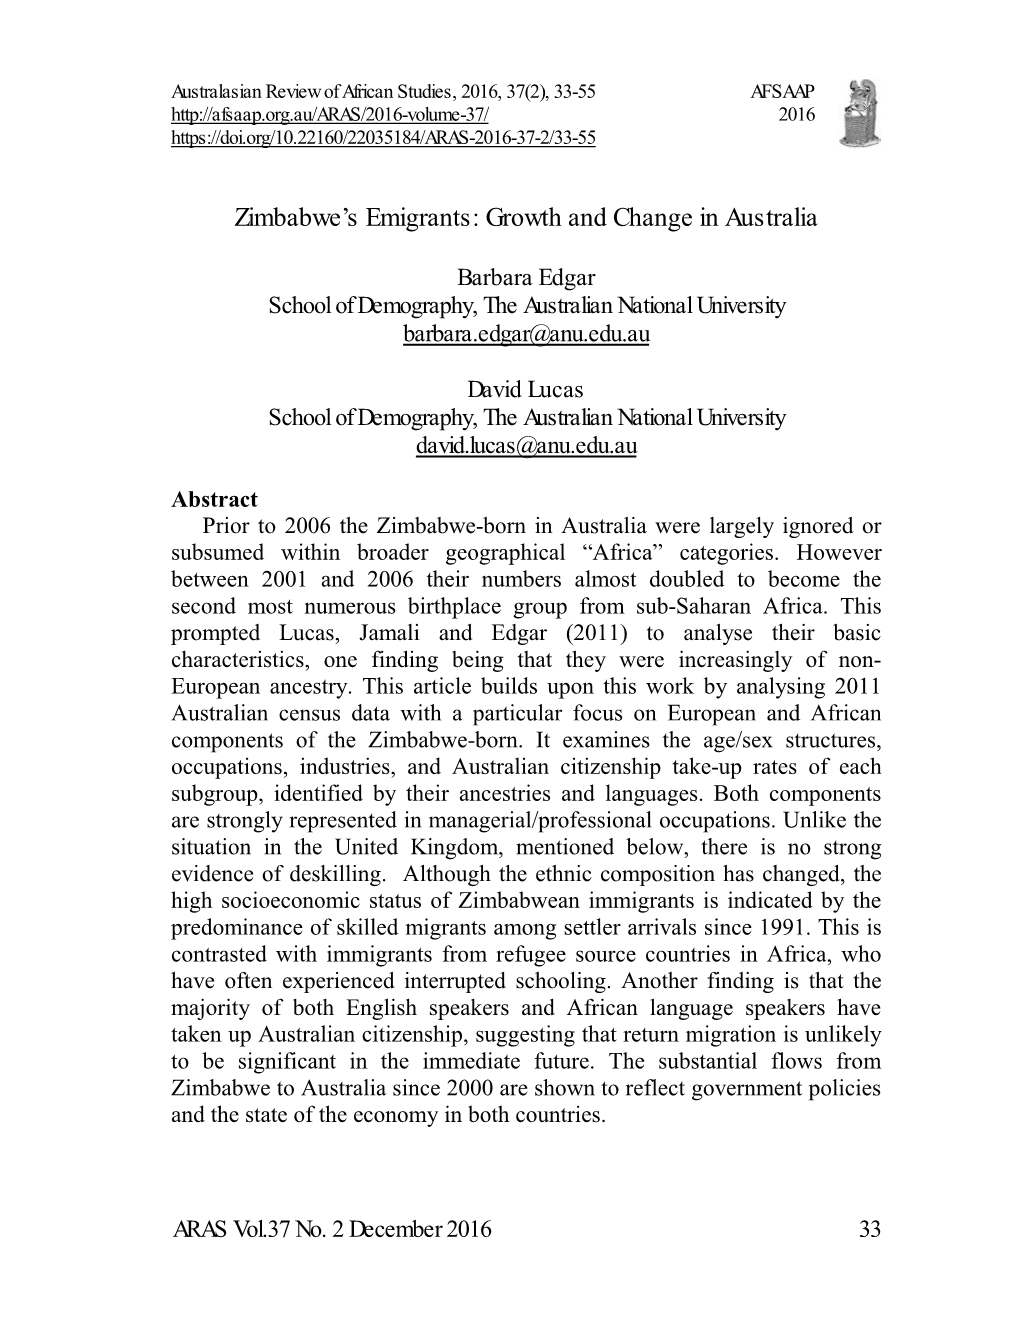 (2016). Zimbabwe's Emigrants: Growth and Change in Australia